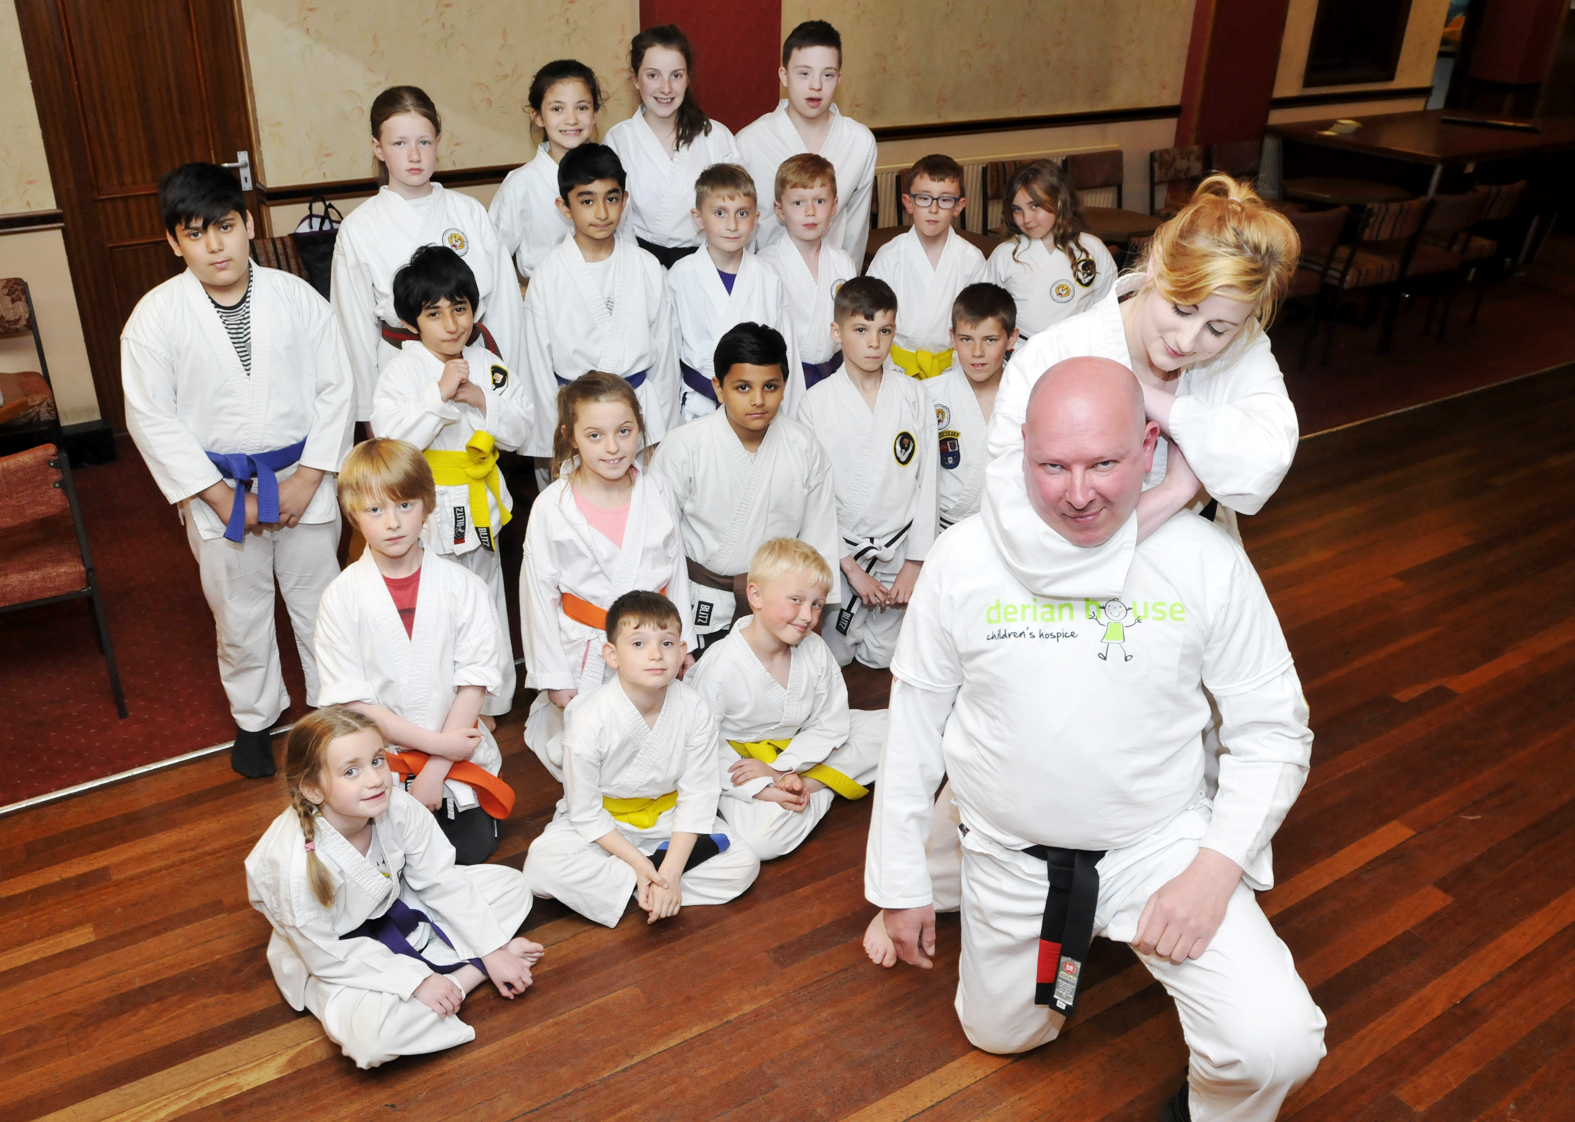 Karate club members to showcase skills at charity fundraiser